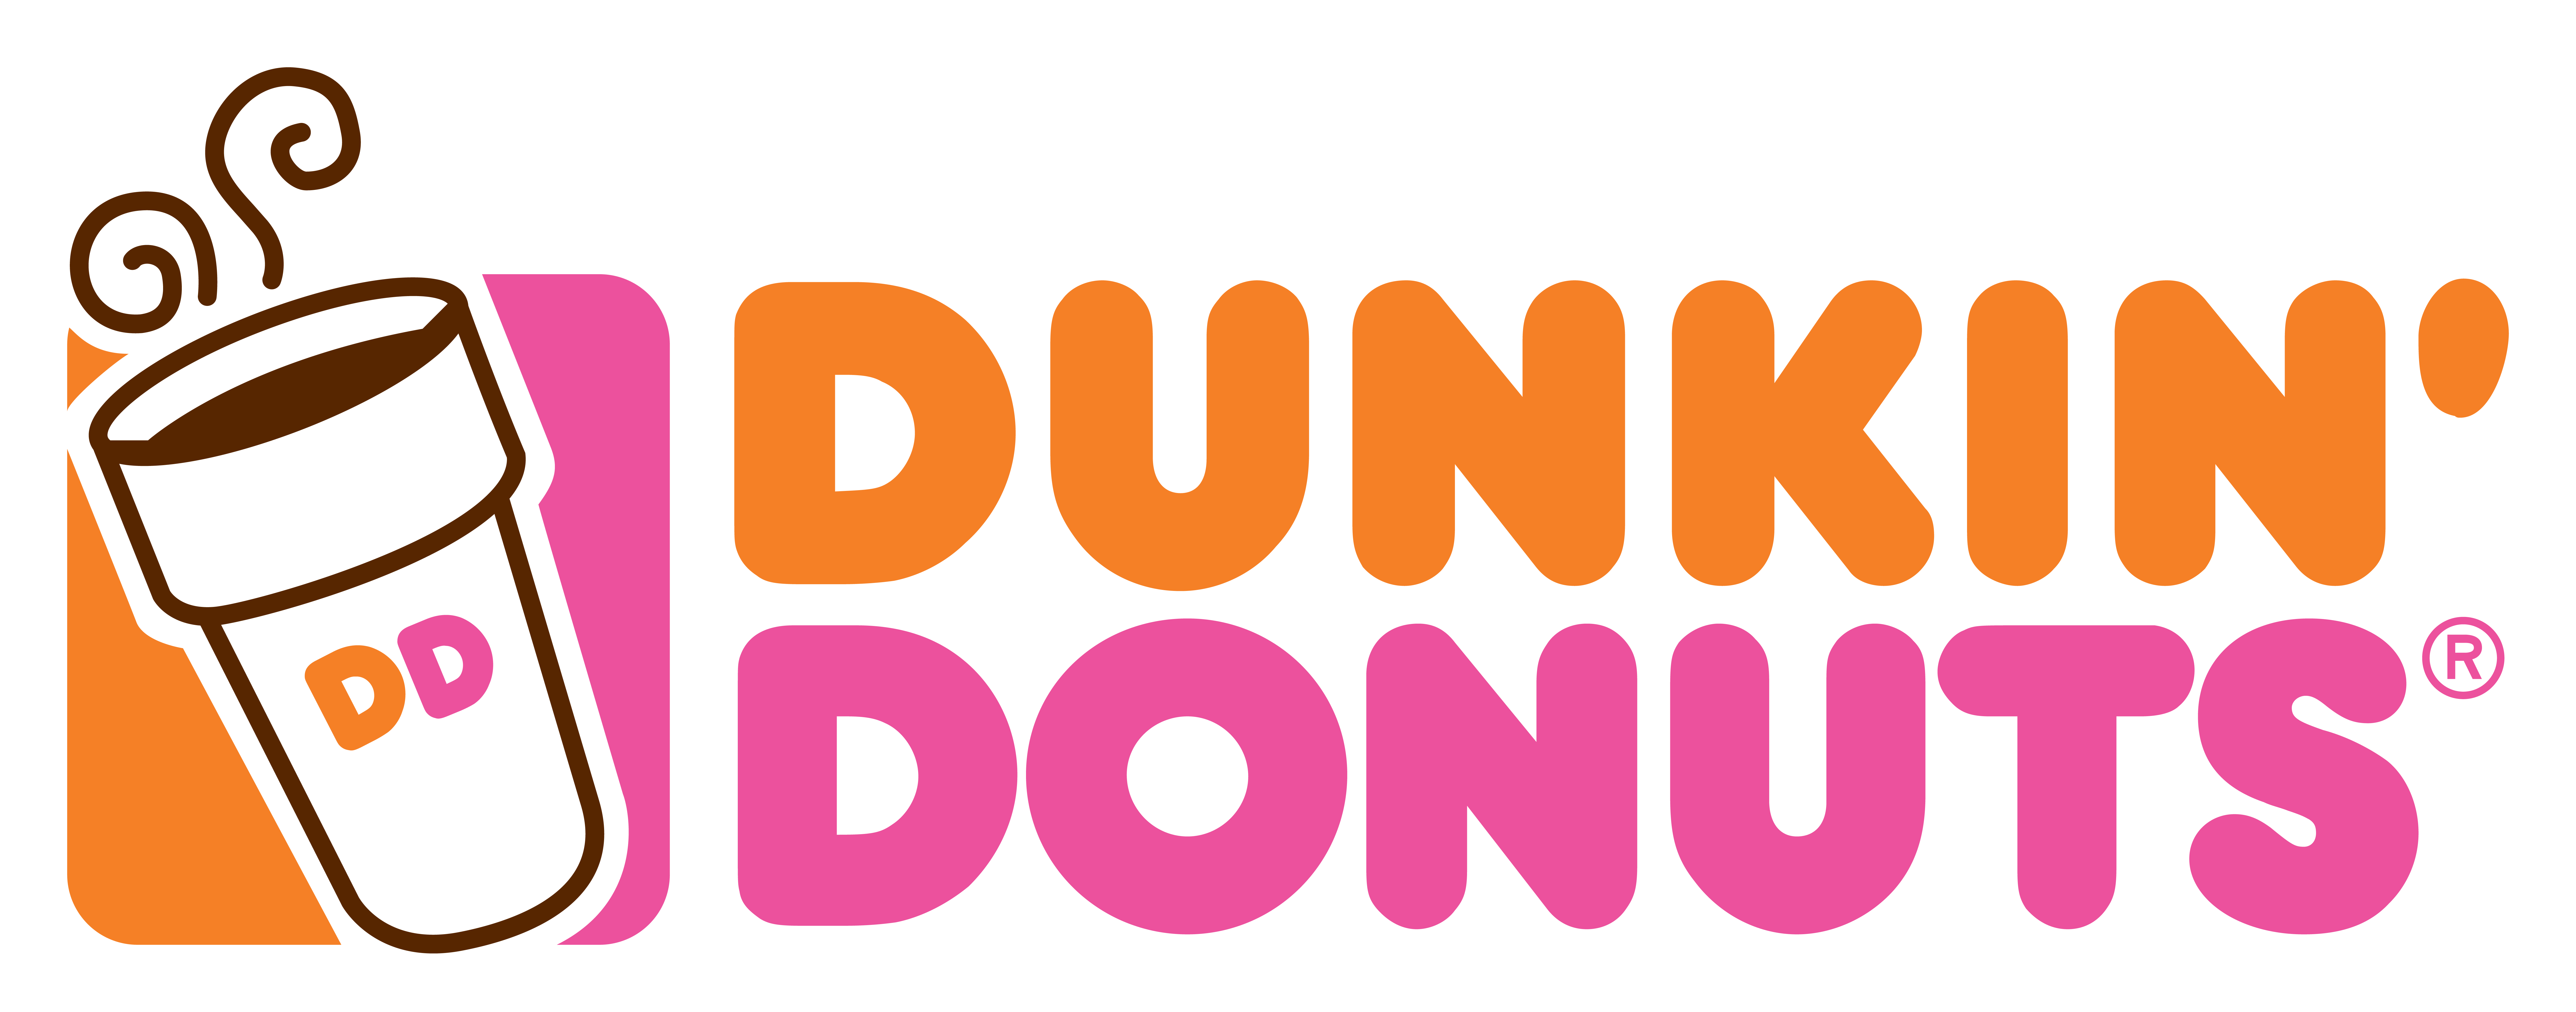 Doughnut donut wallpaper